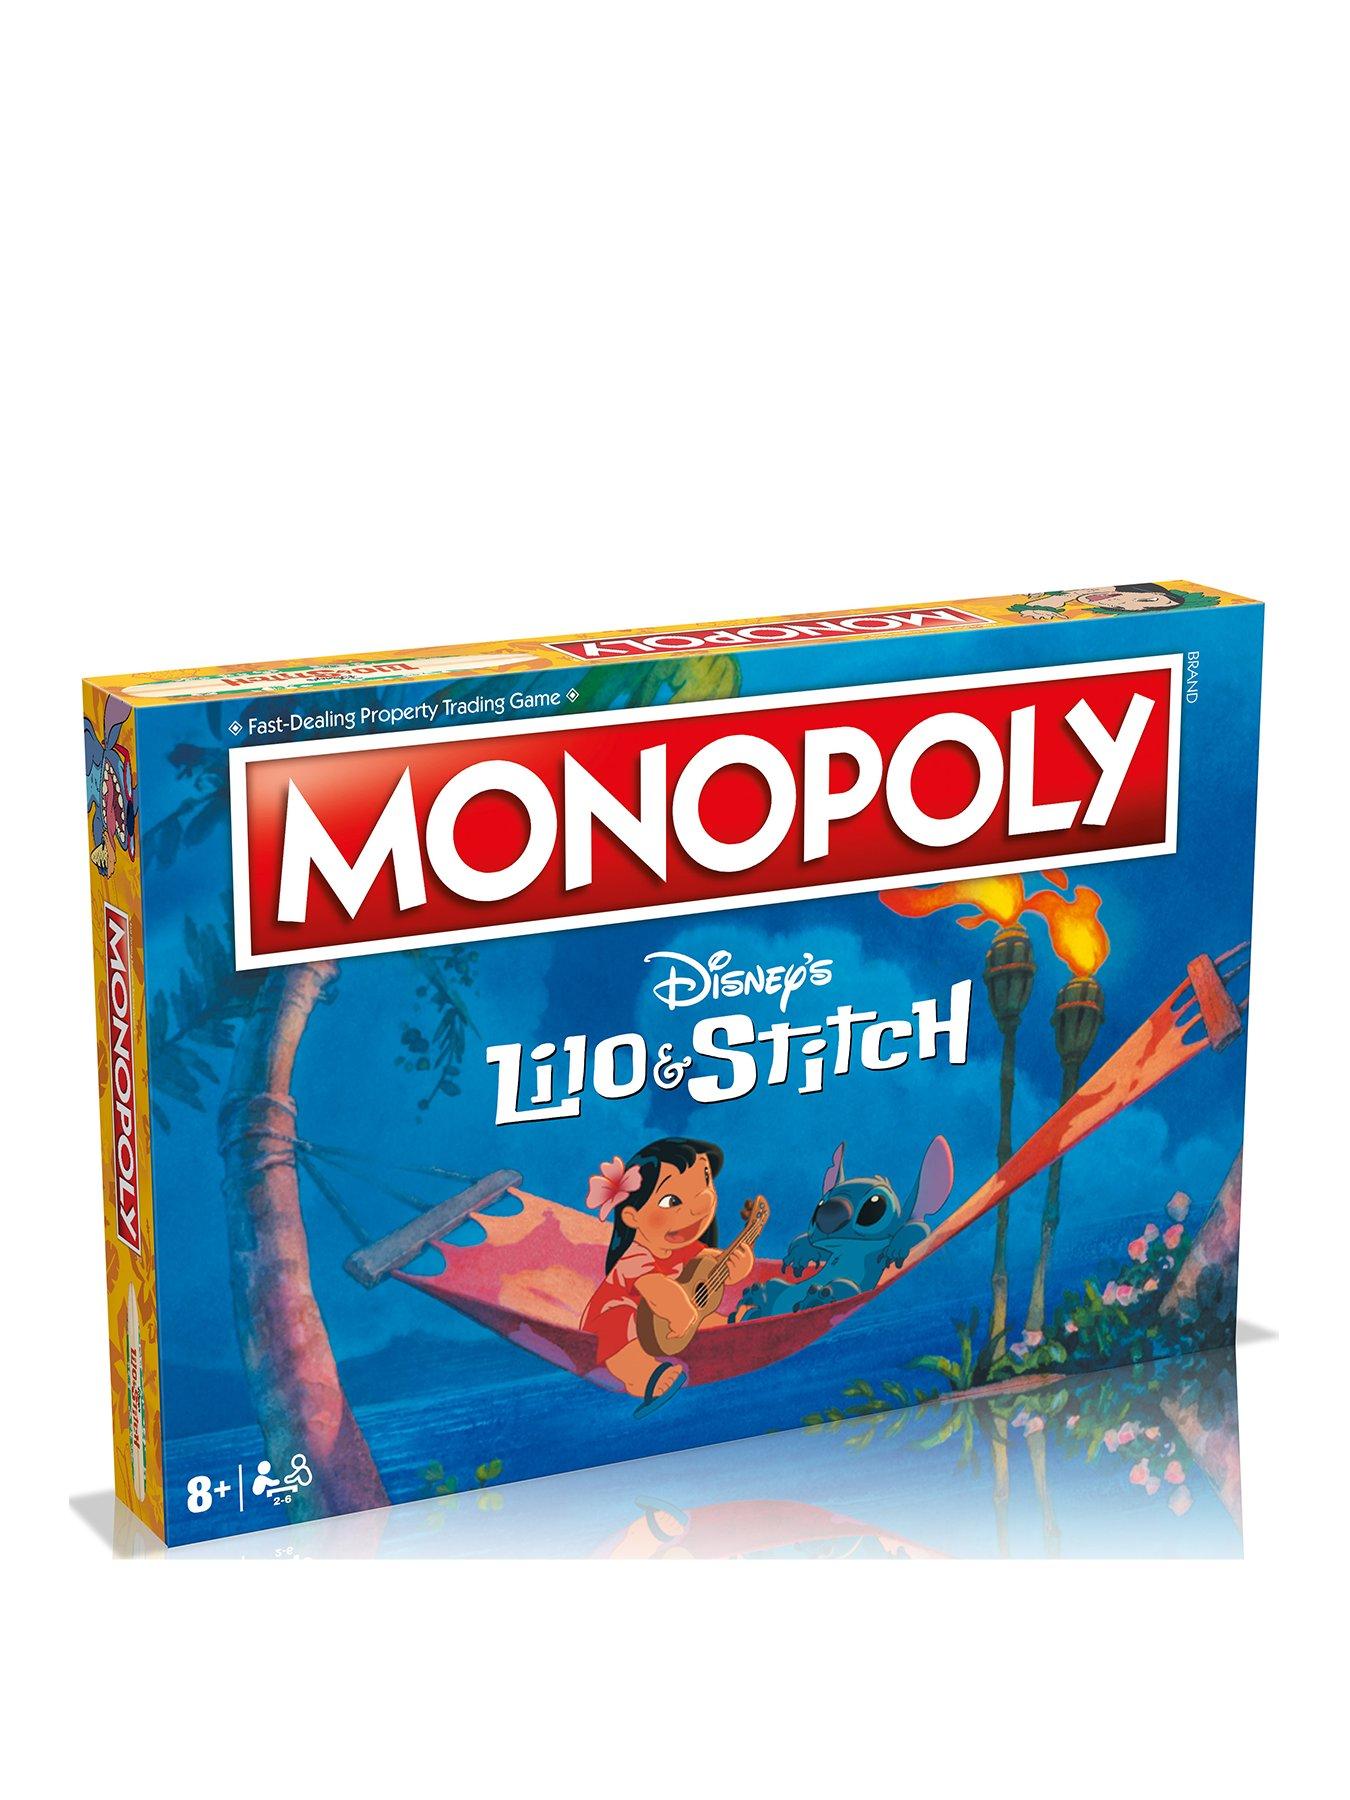 https://media.very.ie/i/littlewoodsireland/VLGEH_SQ2_0000000099_N_A_SLf/monopoly-lilo-stitch-monopoly.jpg?$180x240_retinamobilex2$